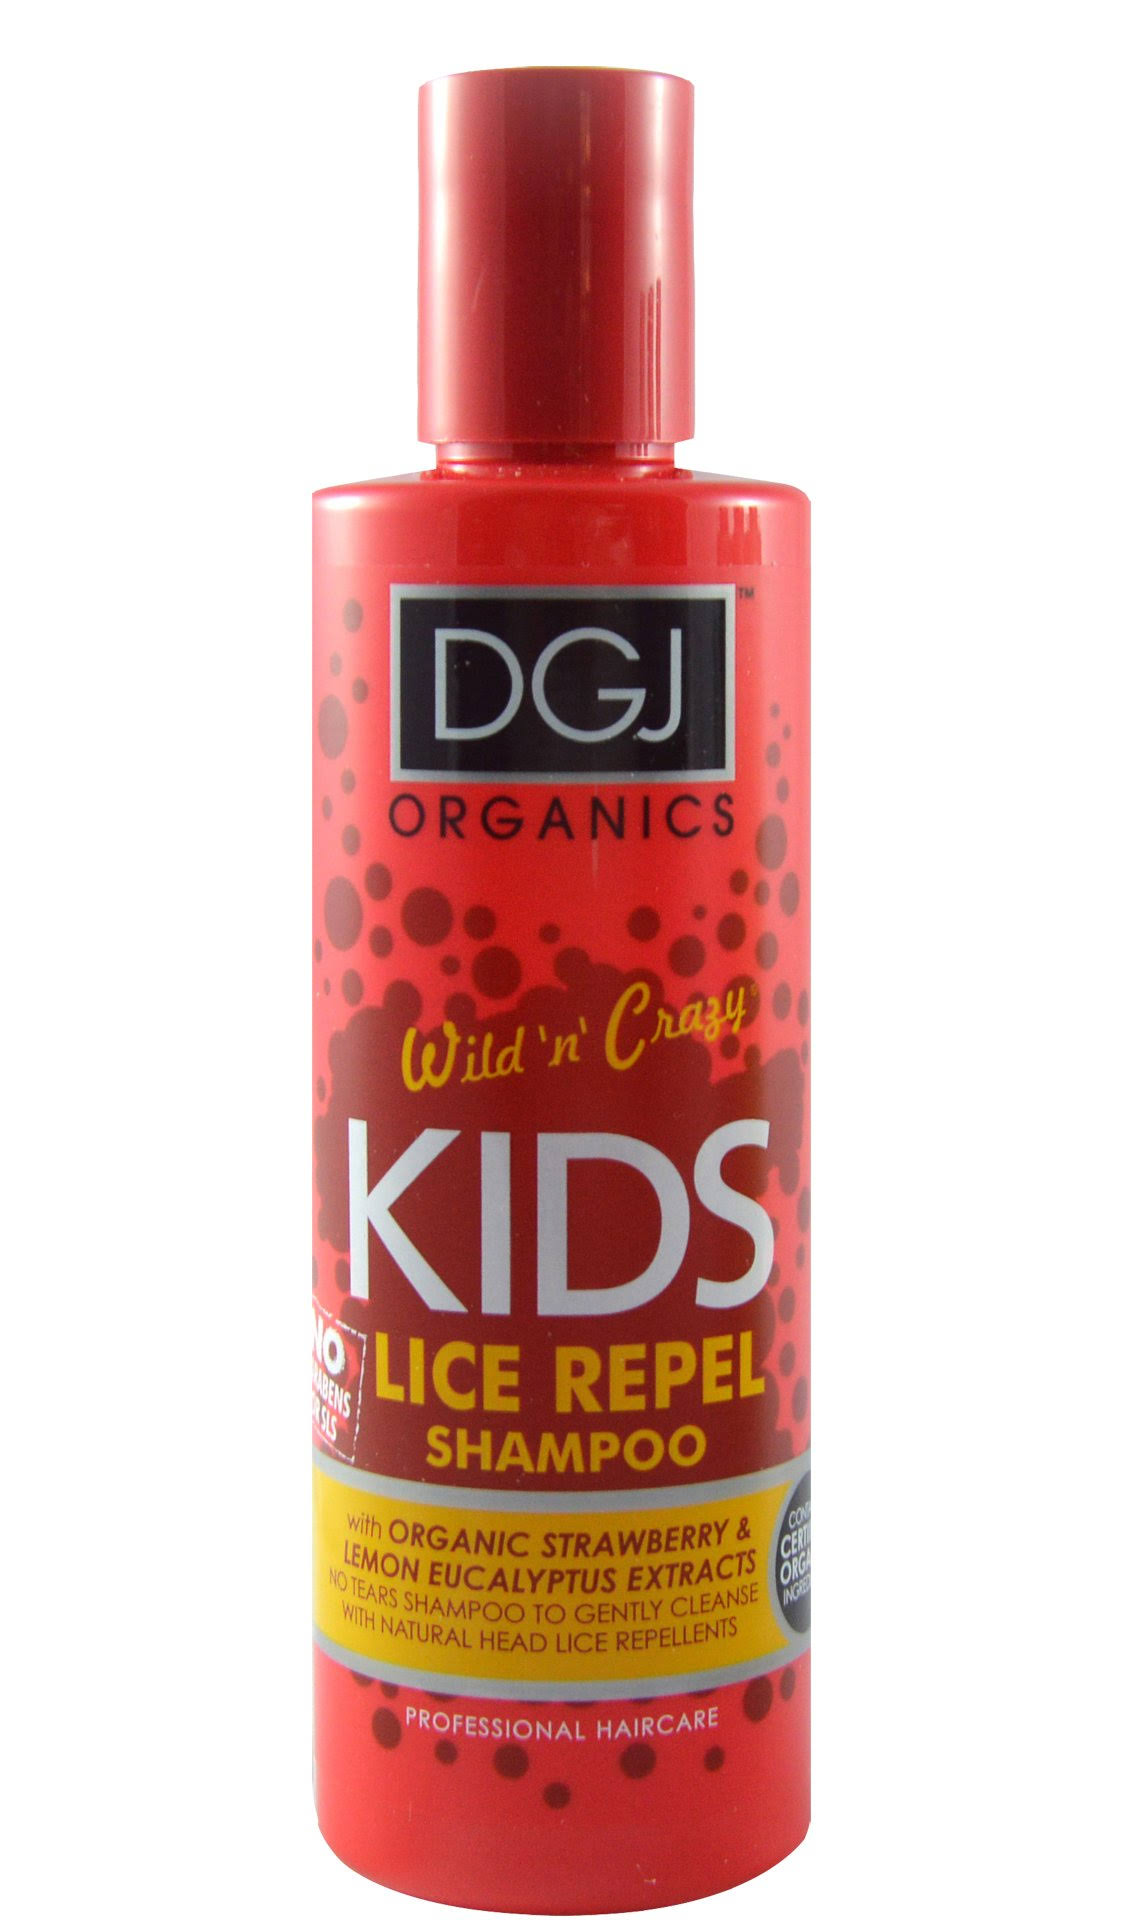 DGJ Organics Wild N Crazy Kids Strawberry & Lemon Lice Repel Shampoo 250ml